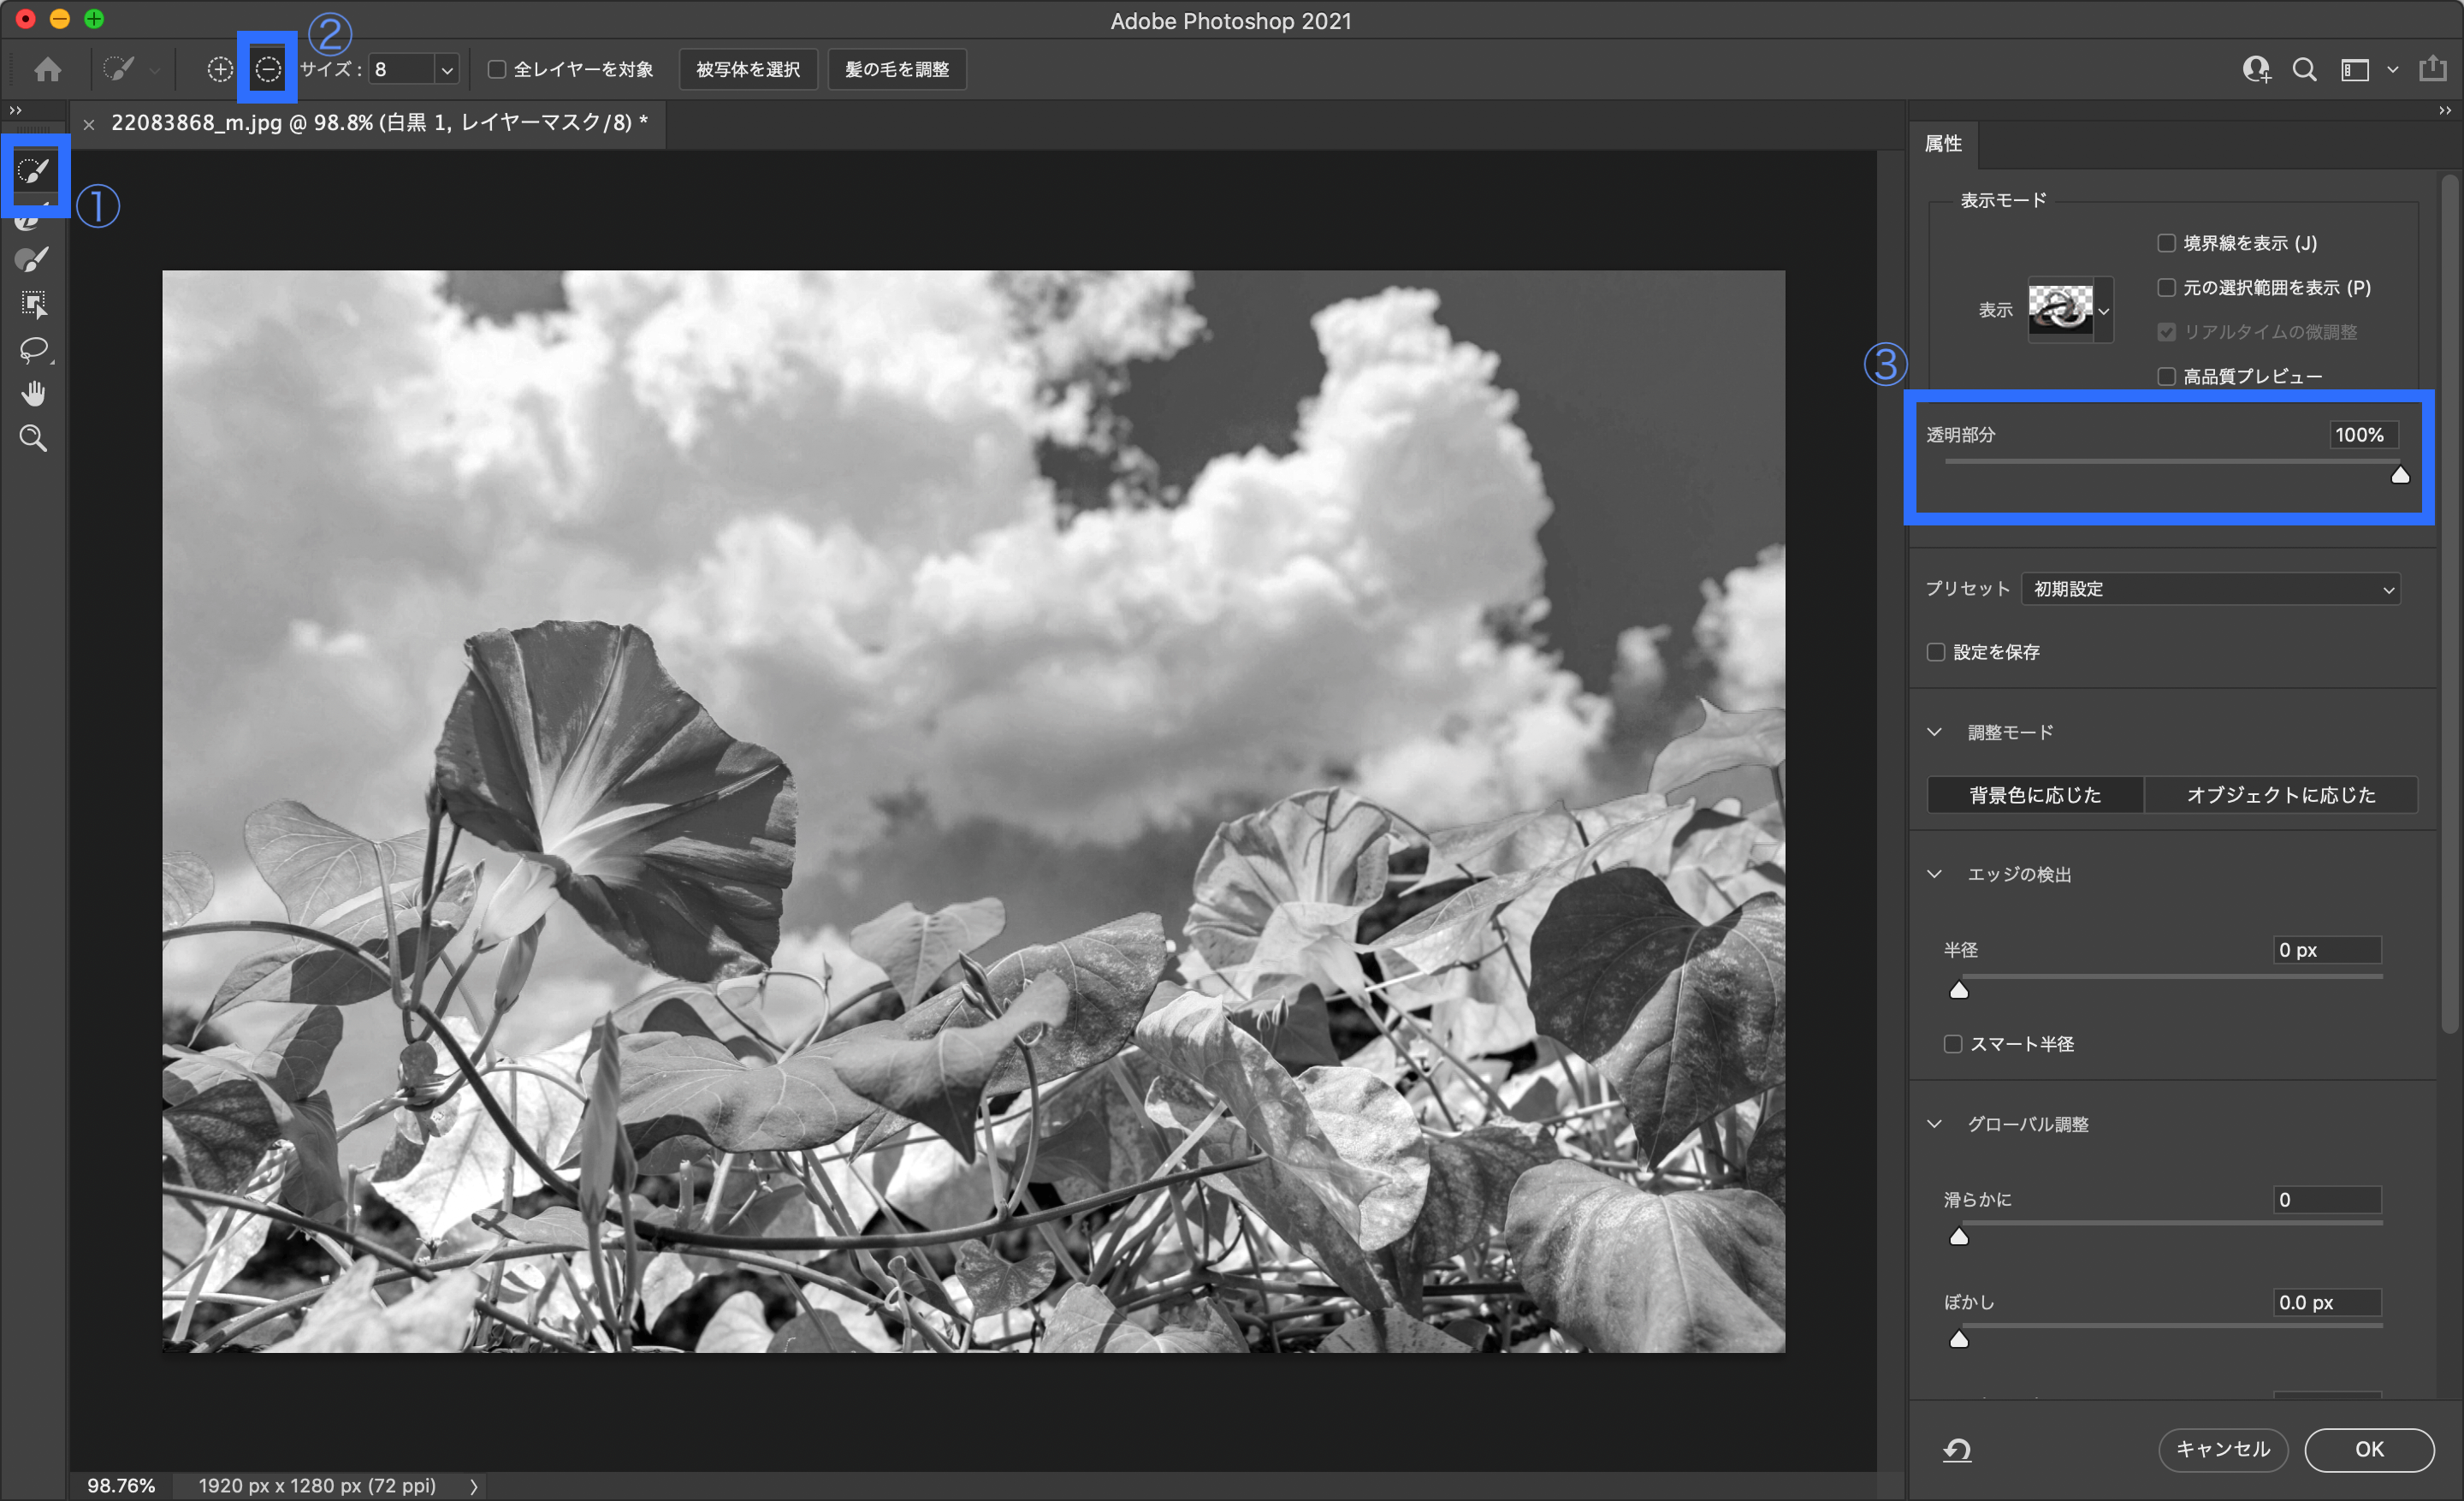 Photoshop 一部だけカラーのモノクロ写真を制作する簡単な方法 株式会社esolab